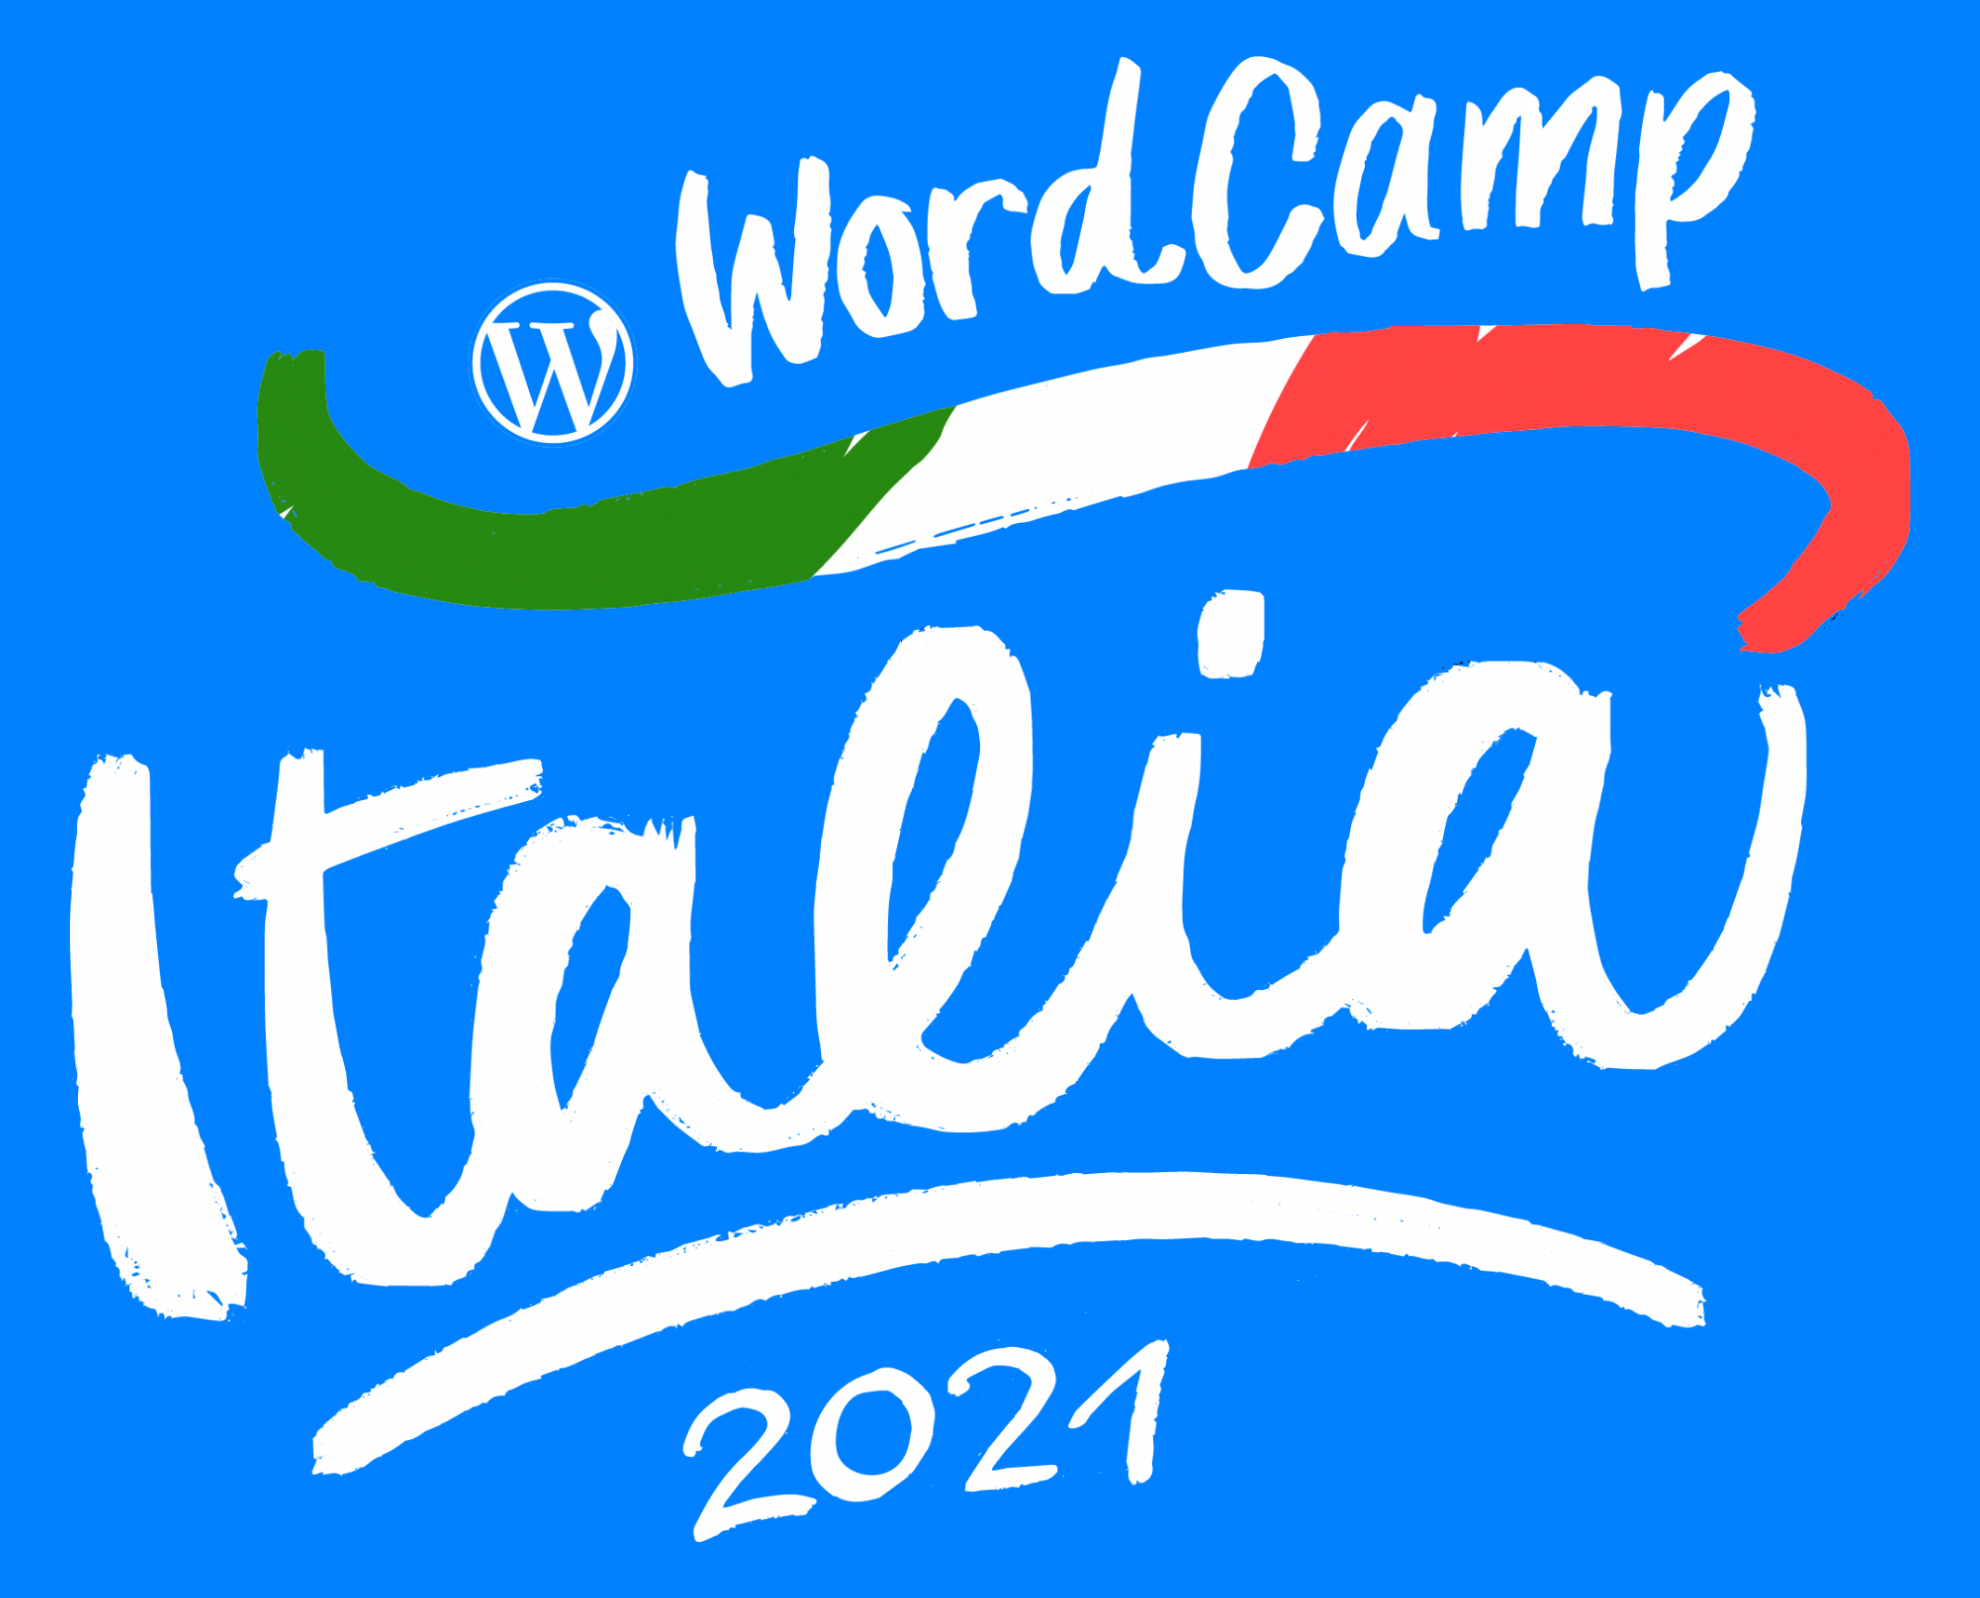 WordCamp Italia 2021